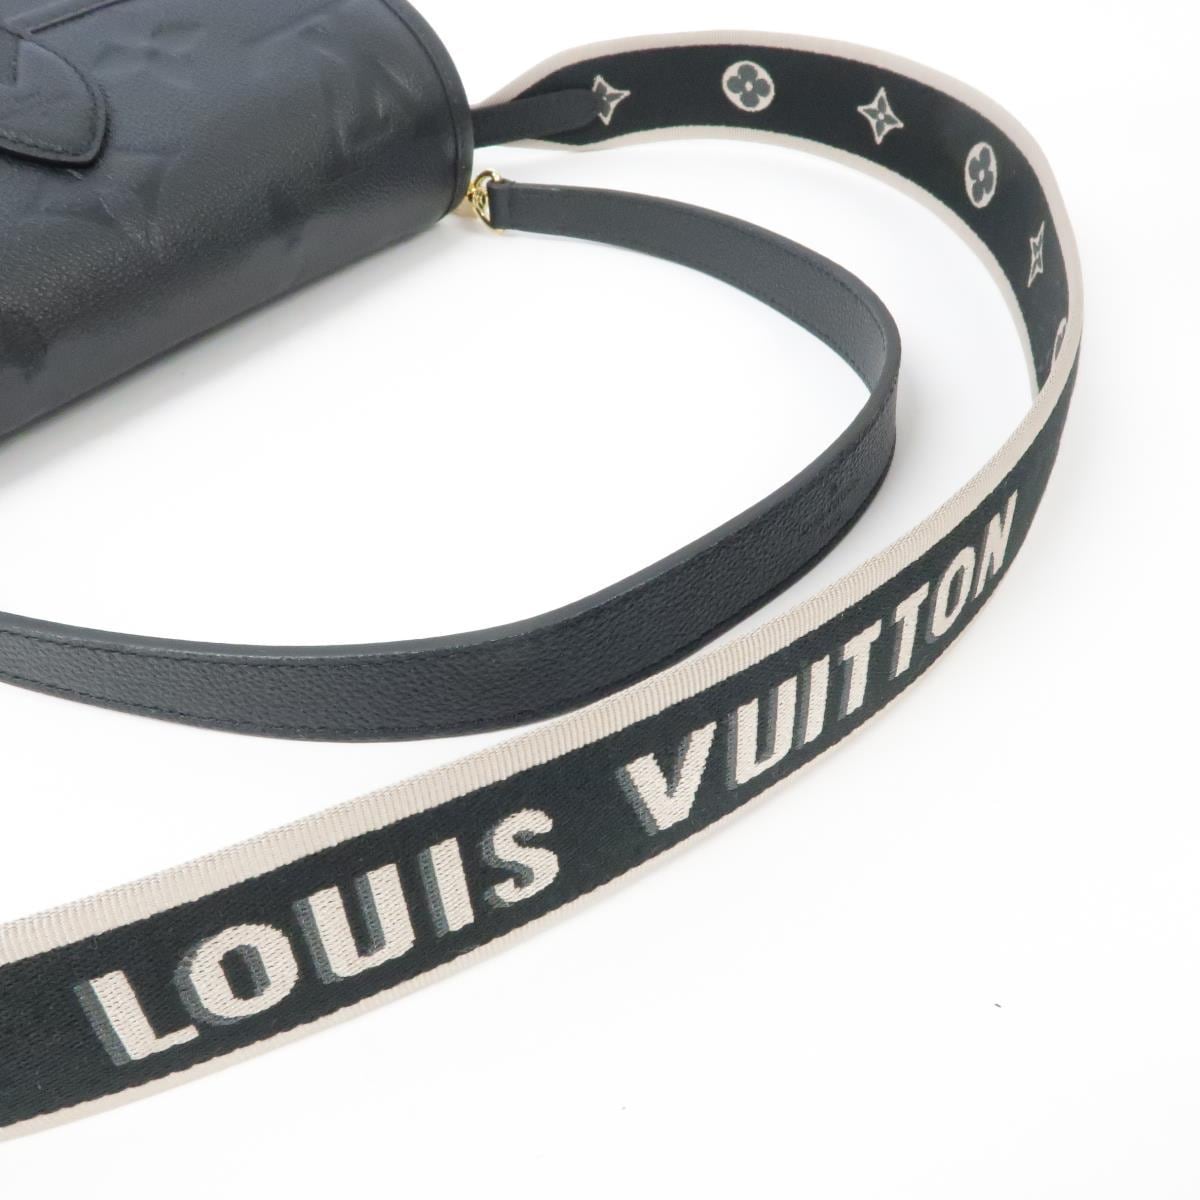 Louis Vuitton Diane Black Monogram Empreinte